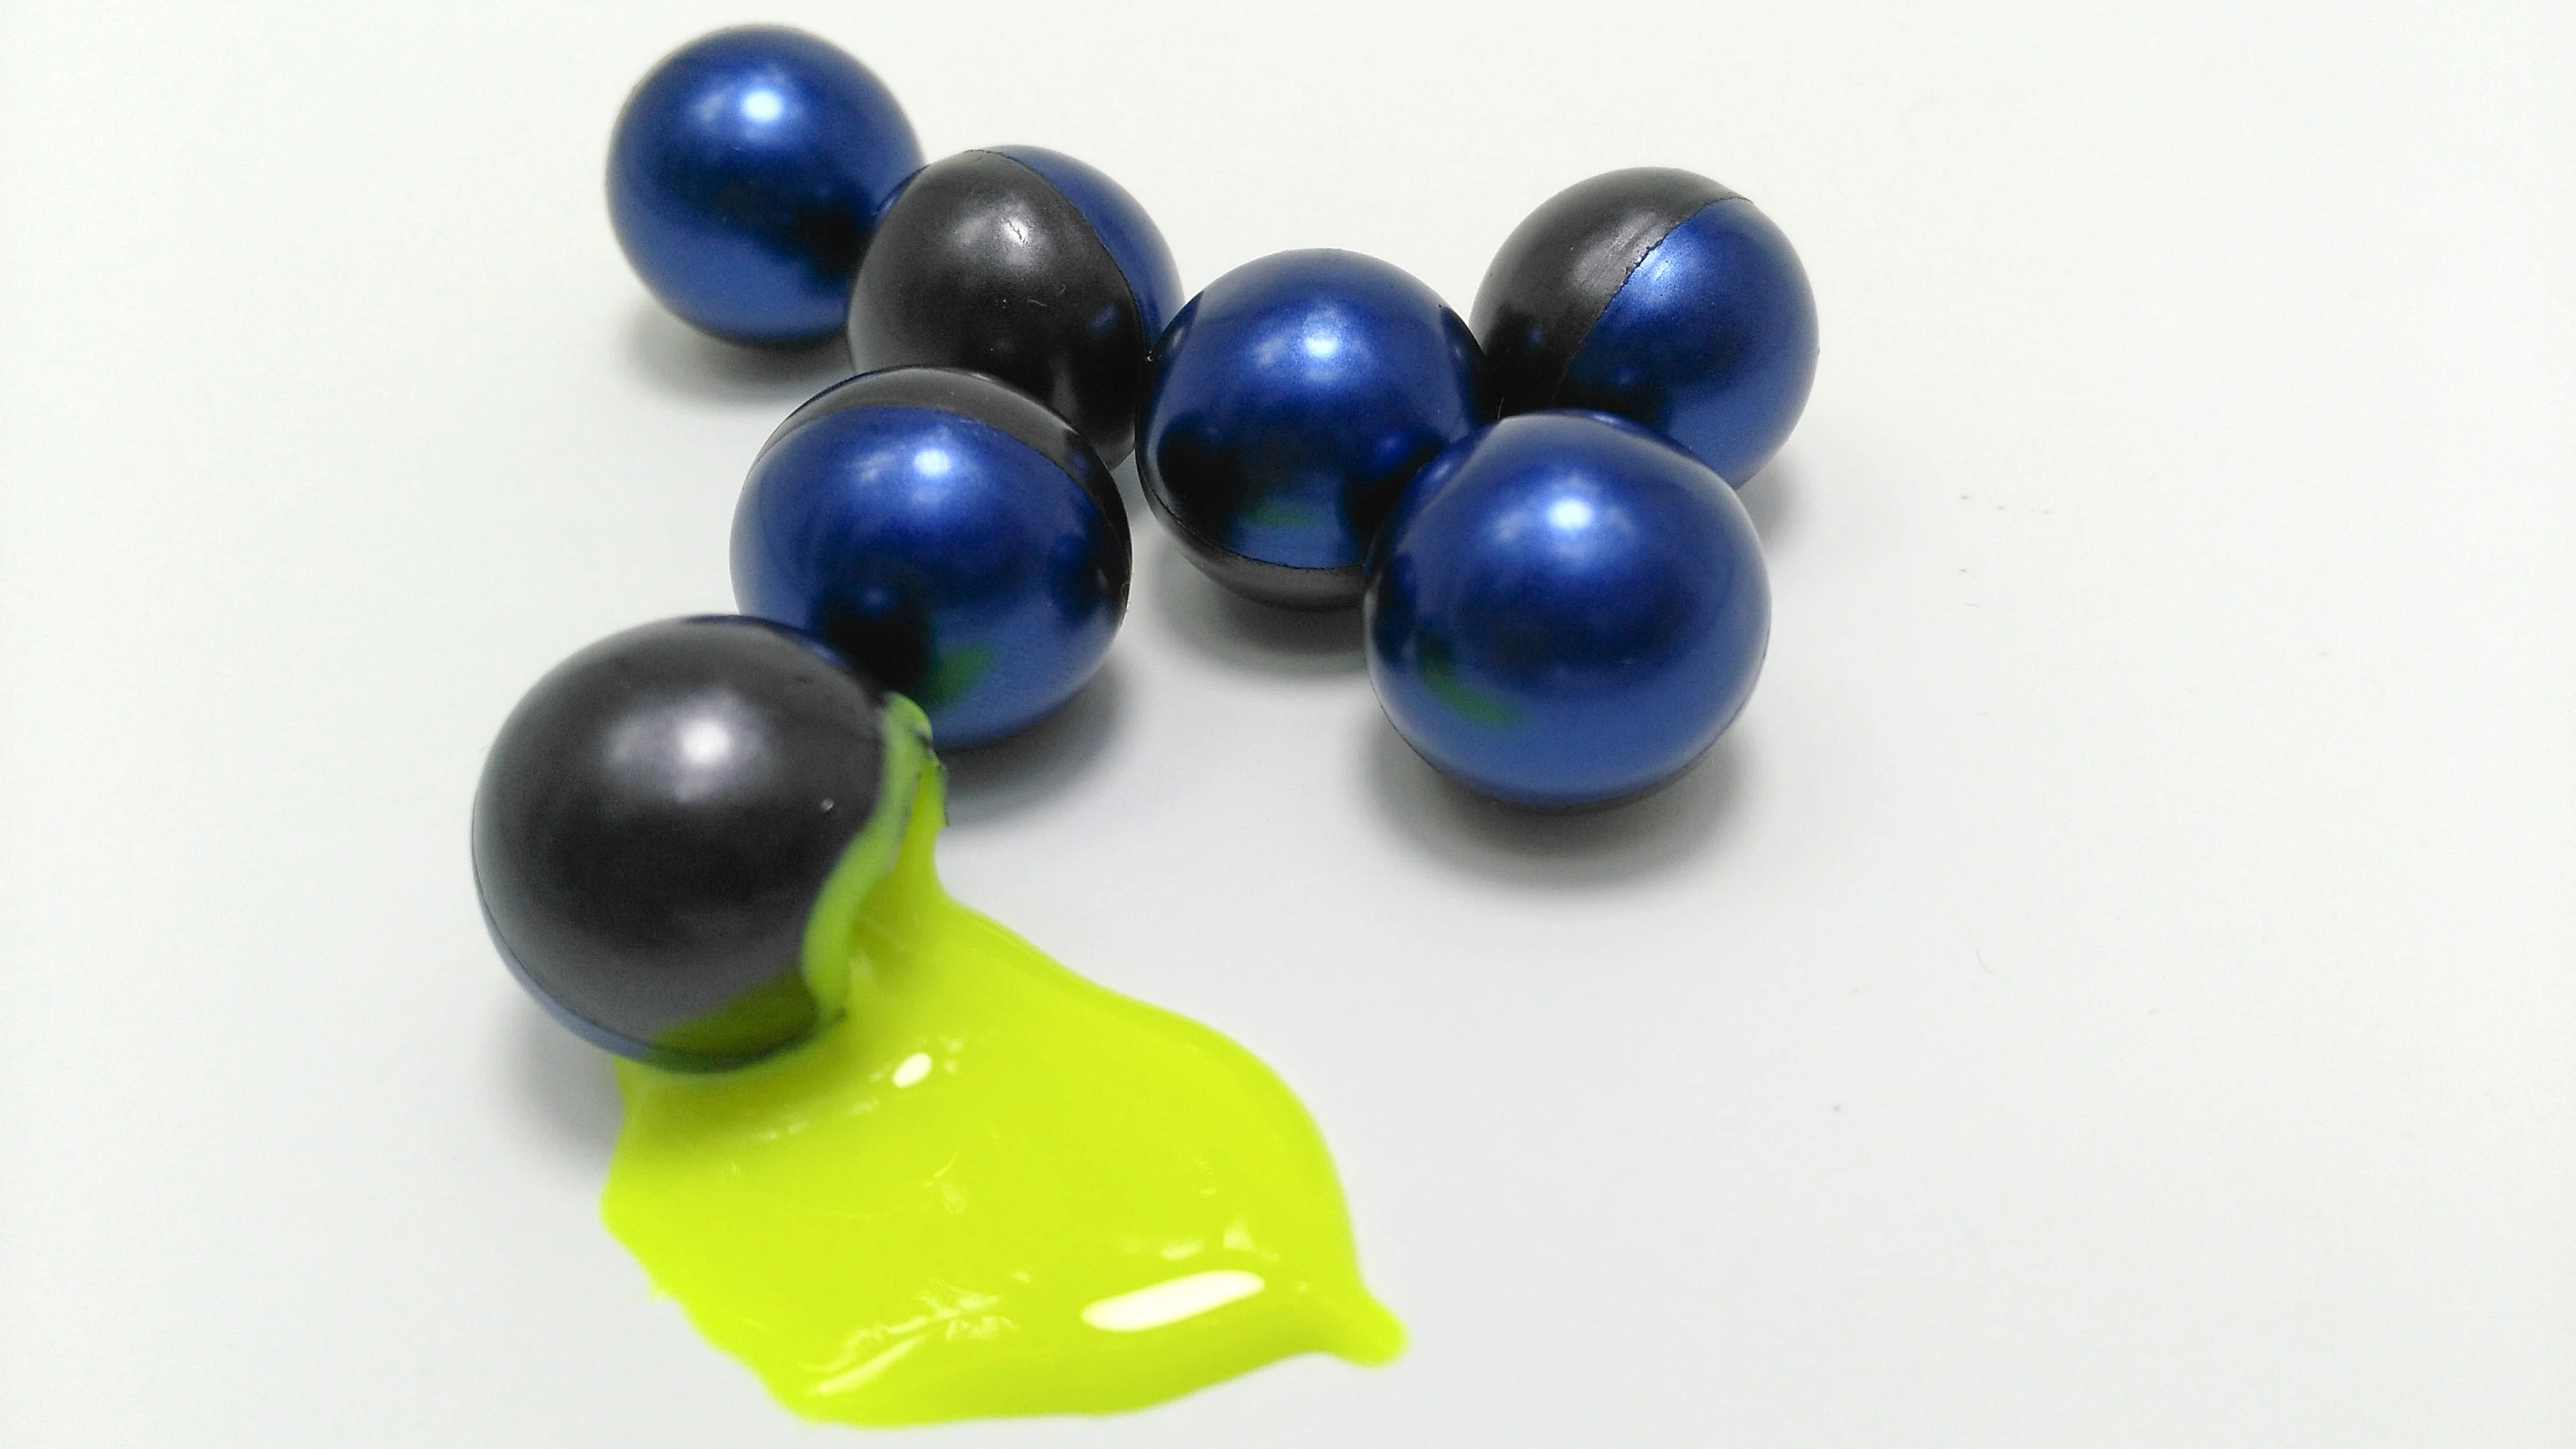 0.68 wholesale paintballs, paint balls, paintball